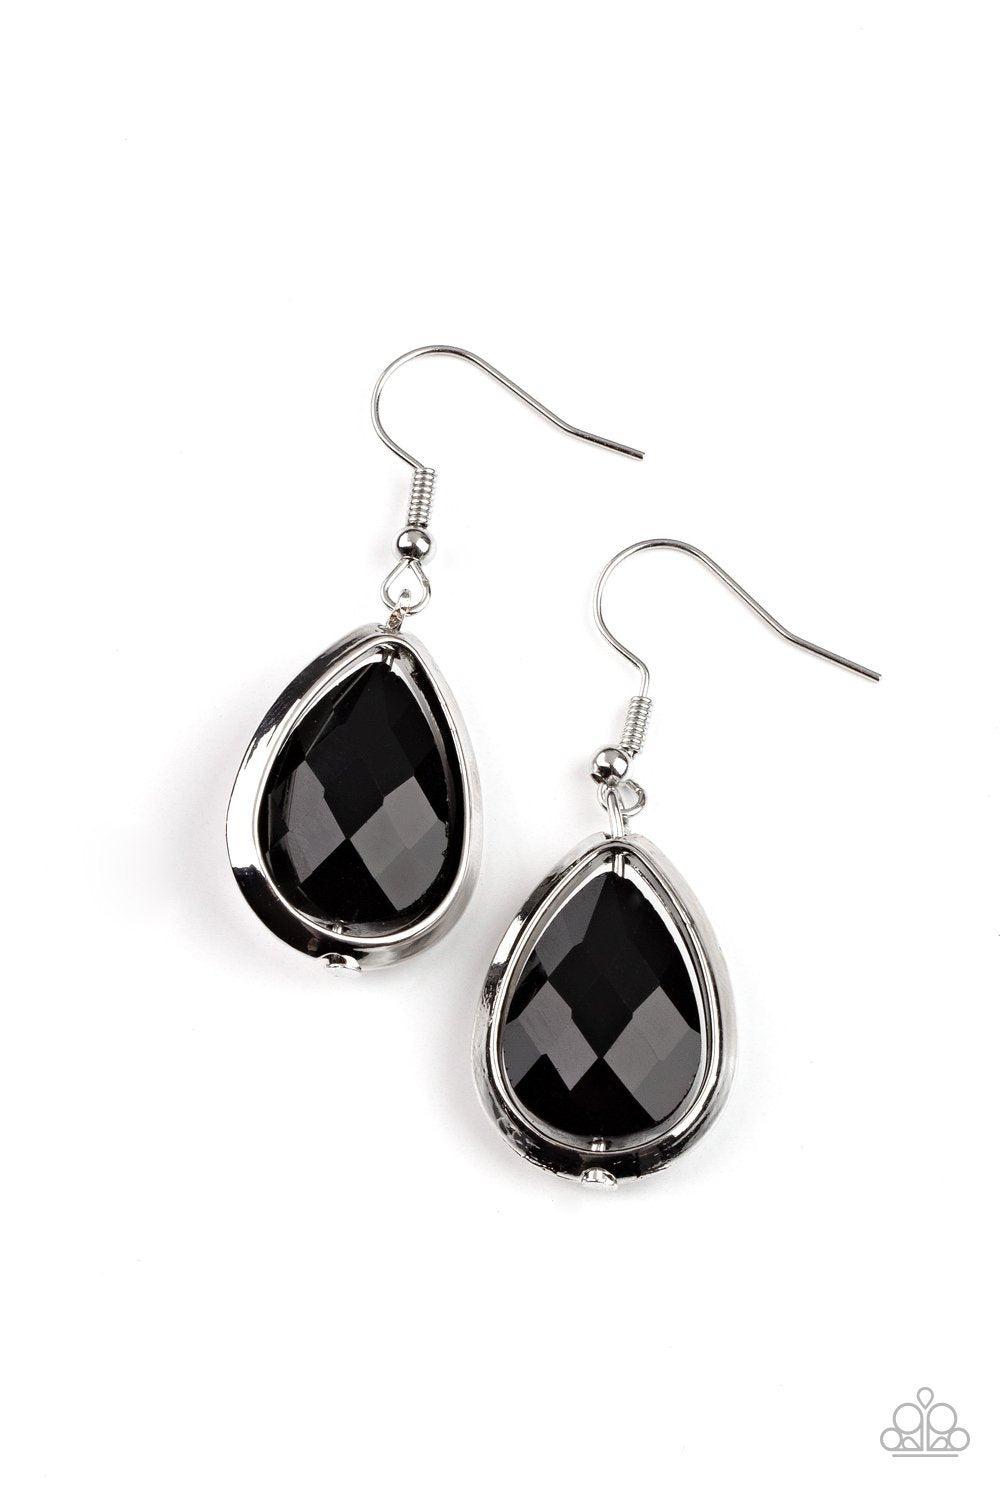 Drop-Dead Duchess Black Earrings - Paparazzi Accessories - lightbox -CarasShop.com - $5 Jewelry by Cara Jewels